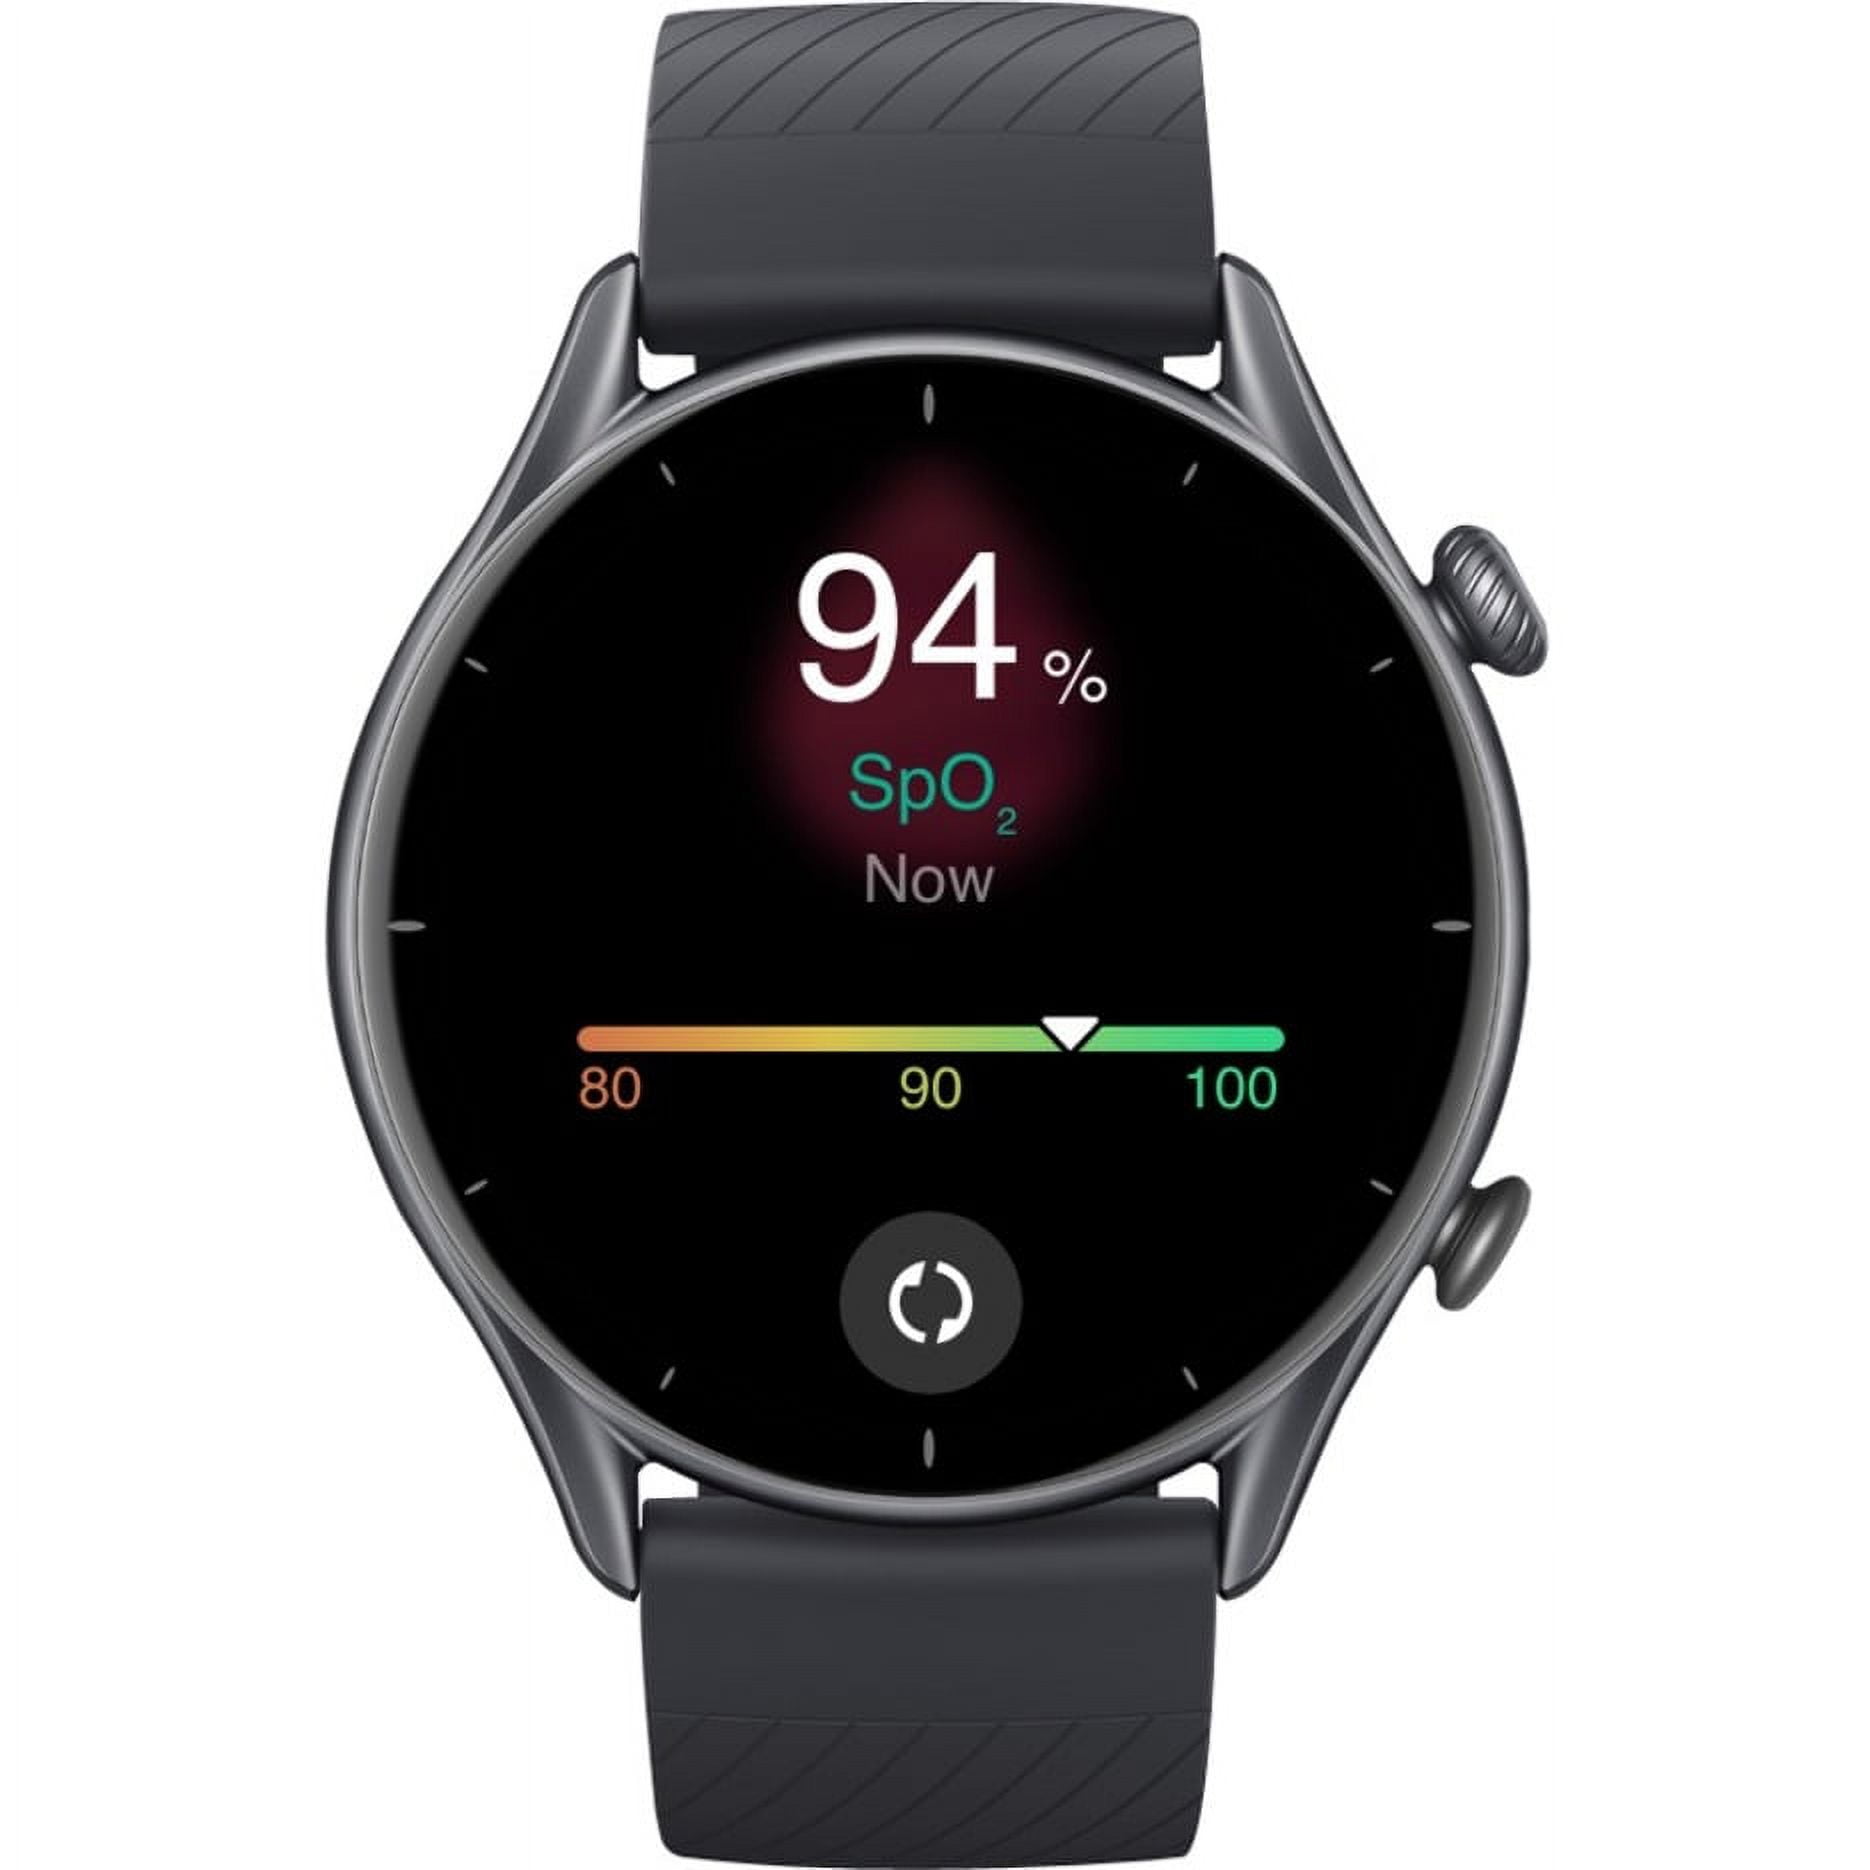  Amazfit GTR 3 - Reloj inteligente para teléfono Android iPhone  con Alexa, rastreador de fitness GPS con 150 modos deportivos, batería de  21 días, pantalla AMOLED de 1.39 pulgadas, seguimiento de